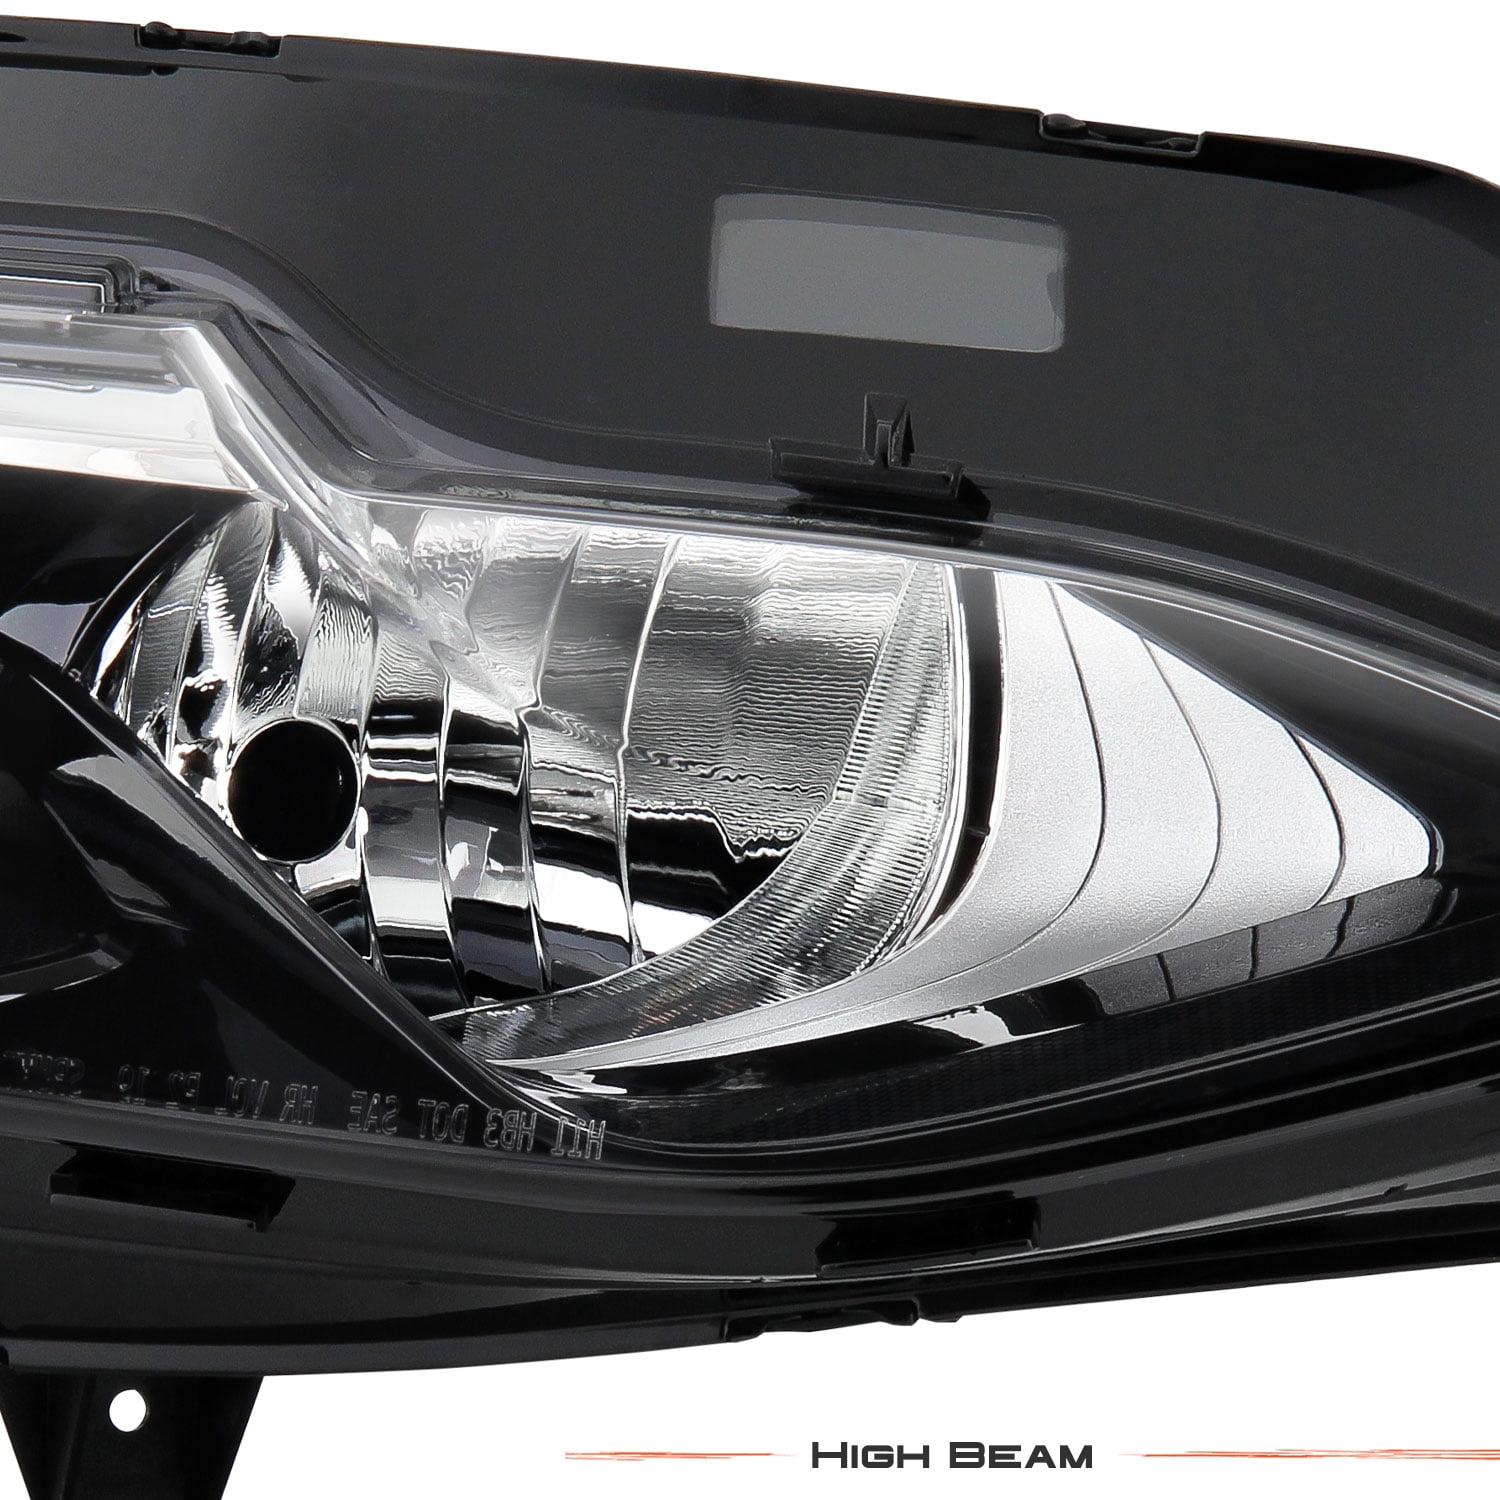 2019-2020 Chevy Malibu Halogen Model Headlight Headlamp Replacement Driver Side